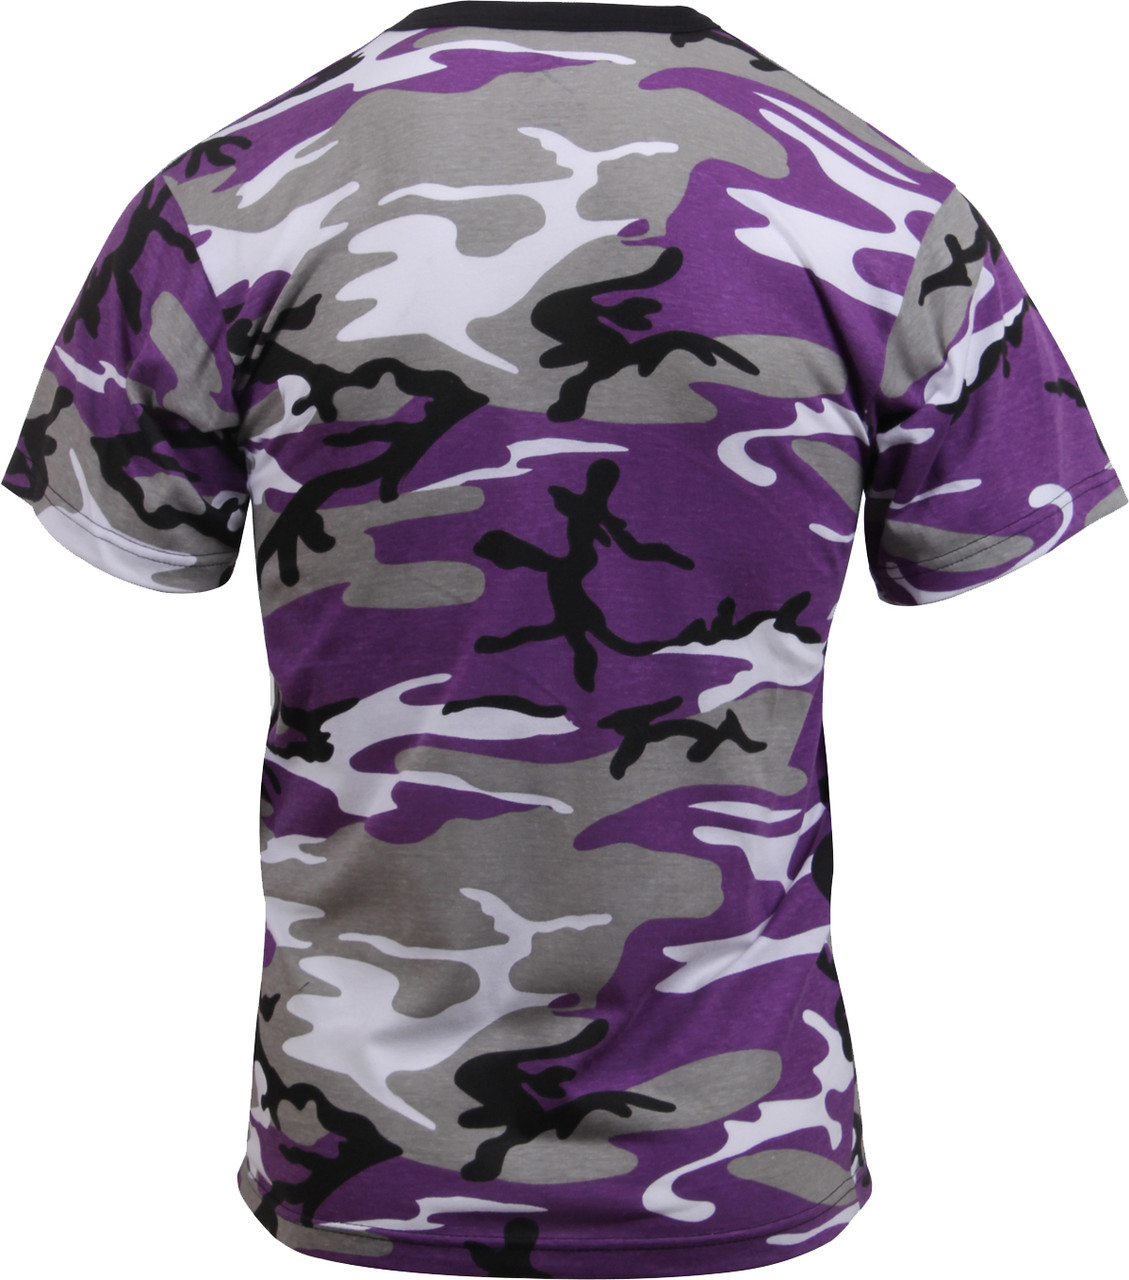 Men's Camouflage Military Shirt, Camouflage Shirts Men